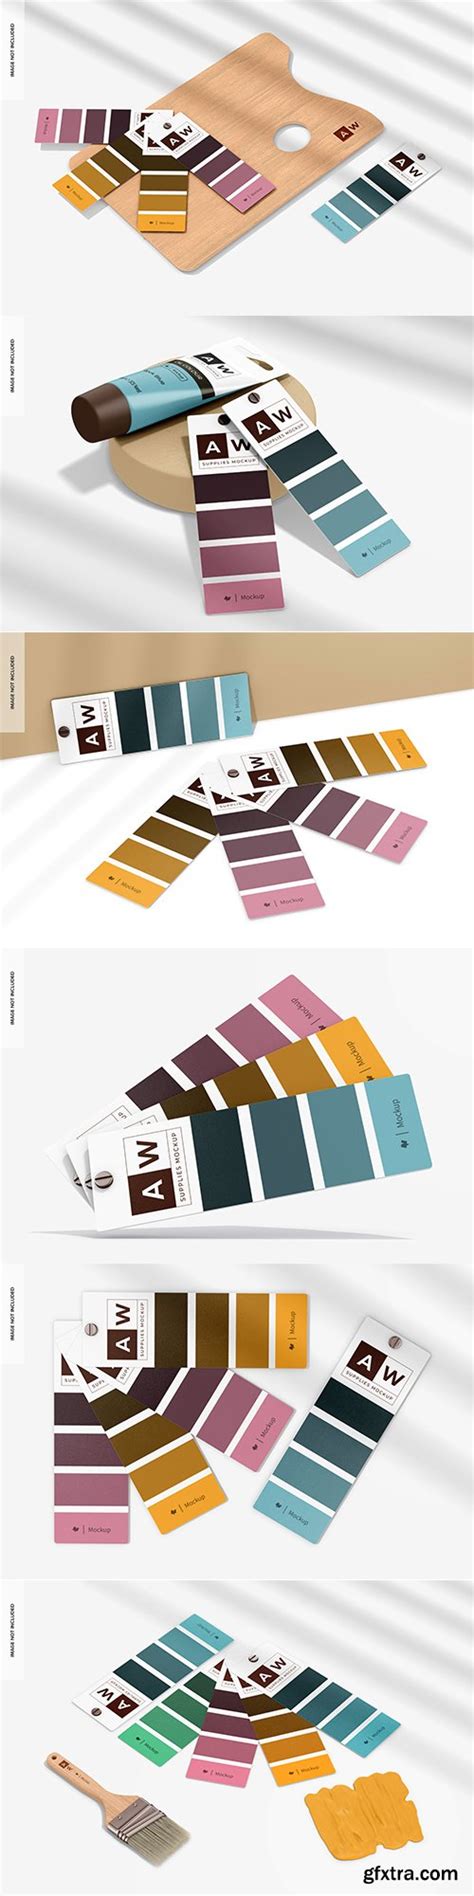 Color Palette Cards Mockup GFxtra